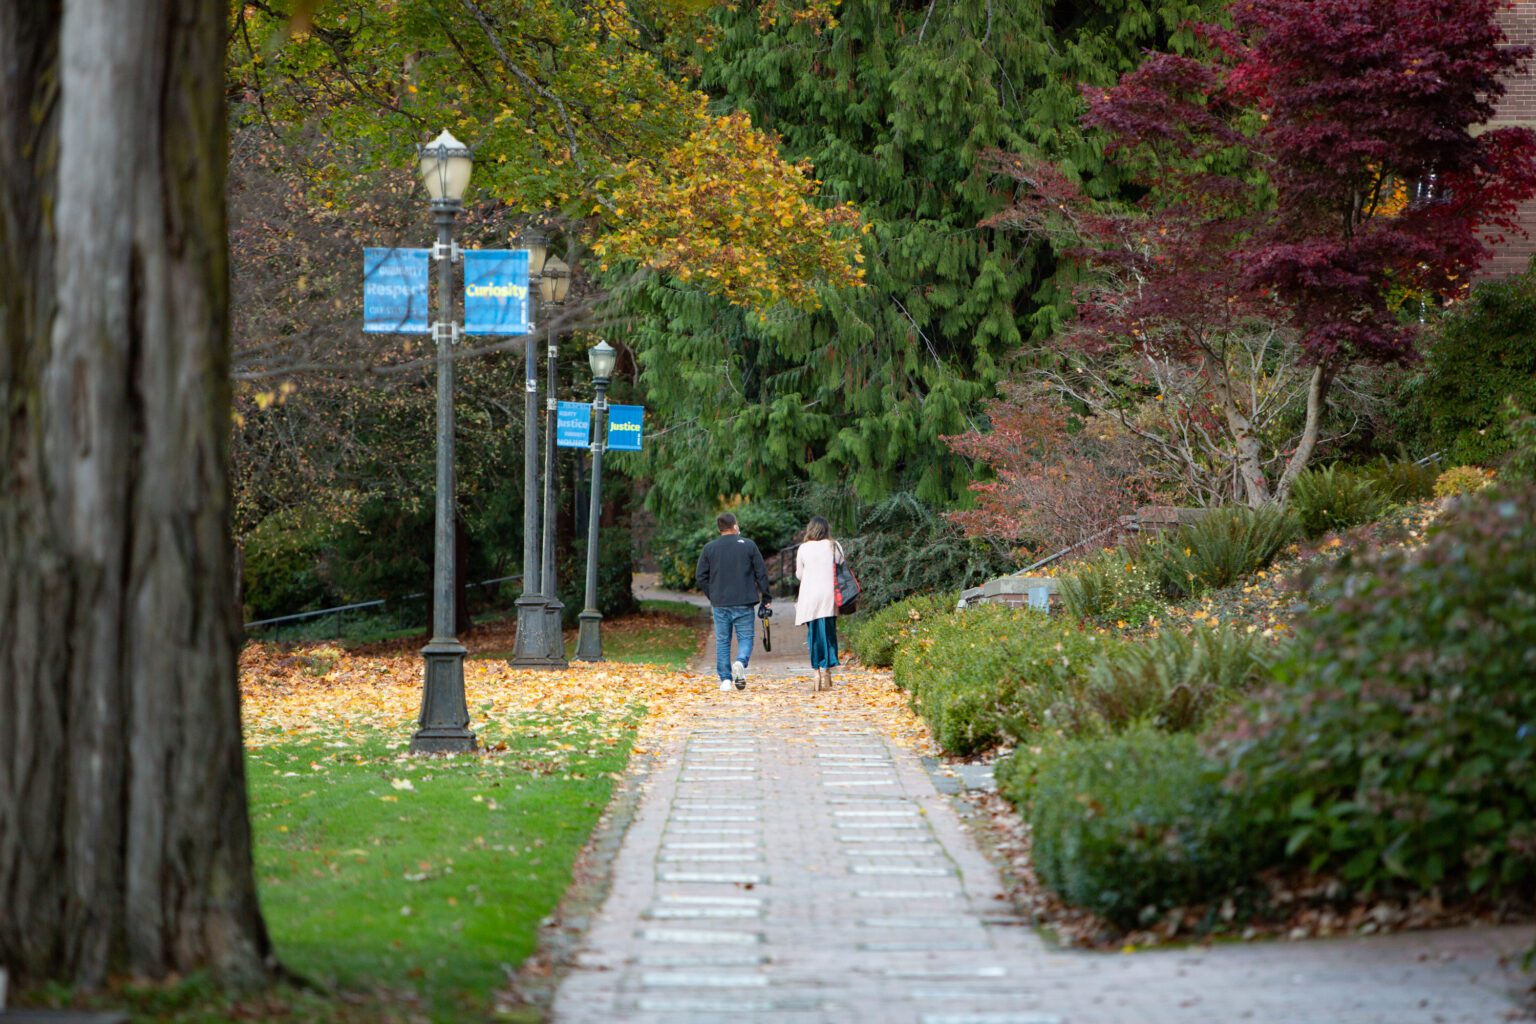 Western Washington University retrofitted 250 lights along walkways